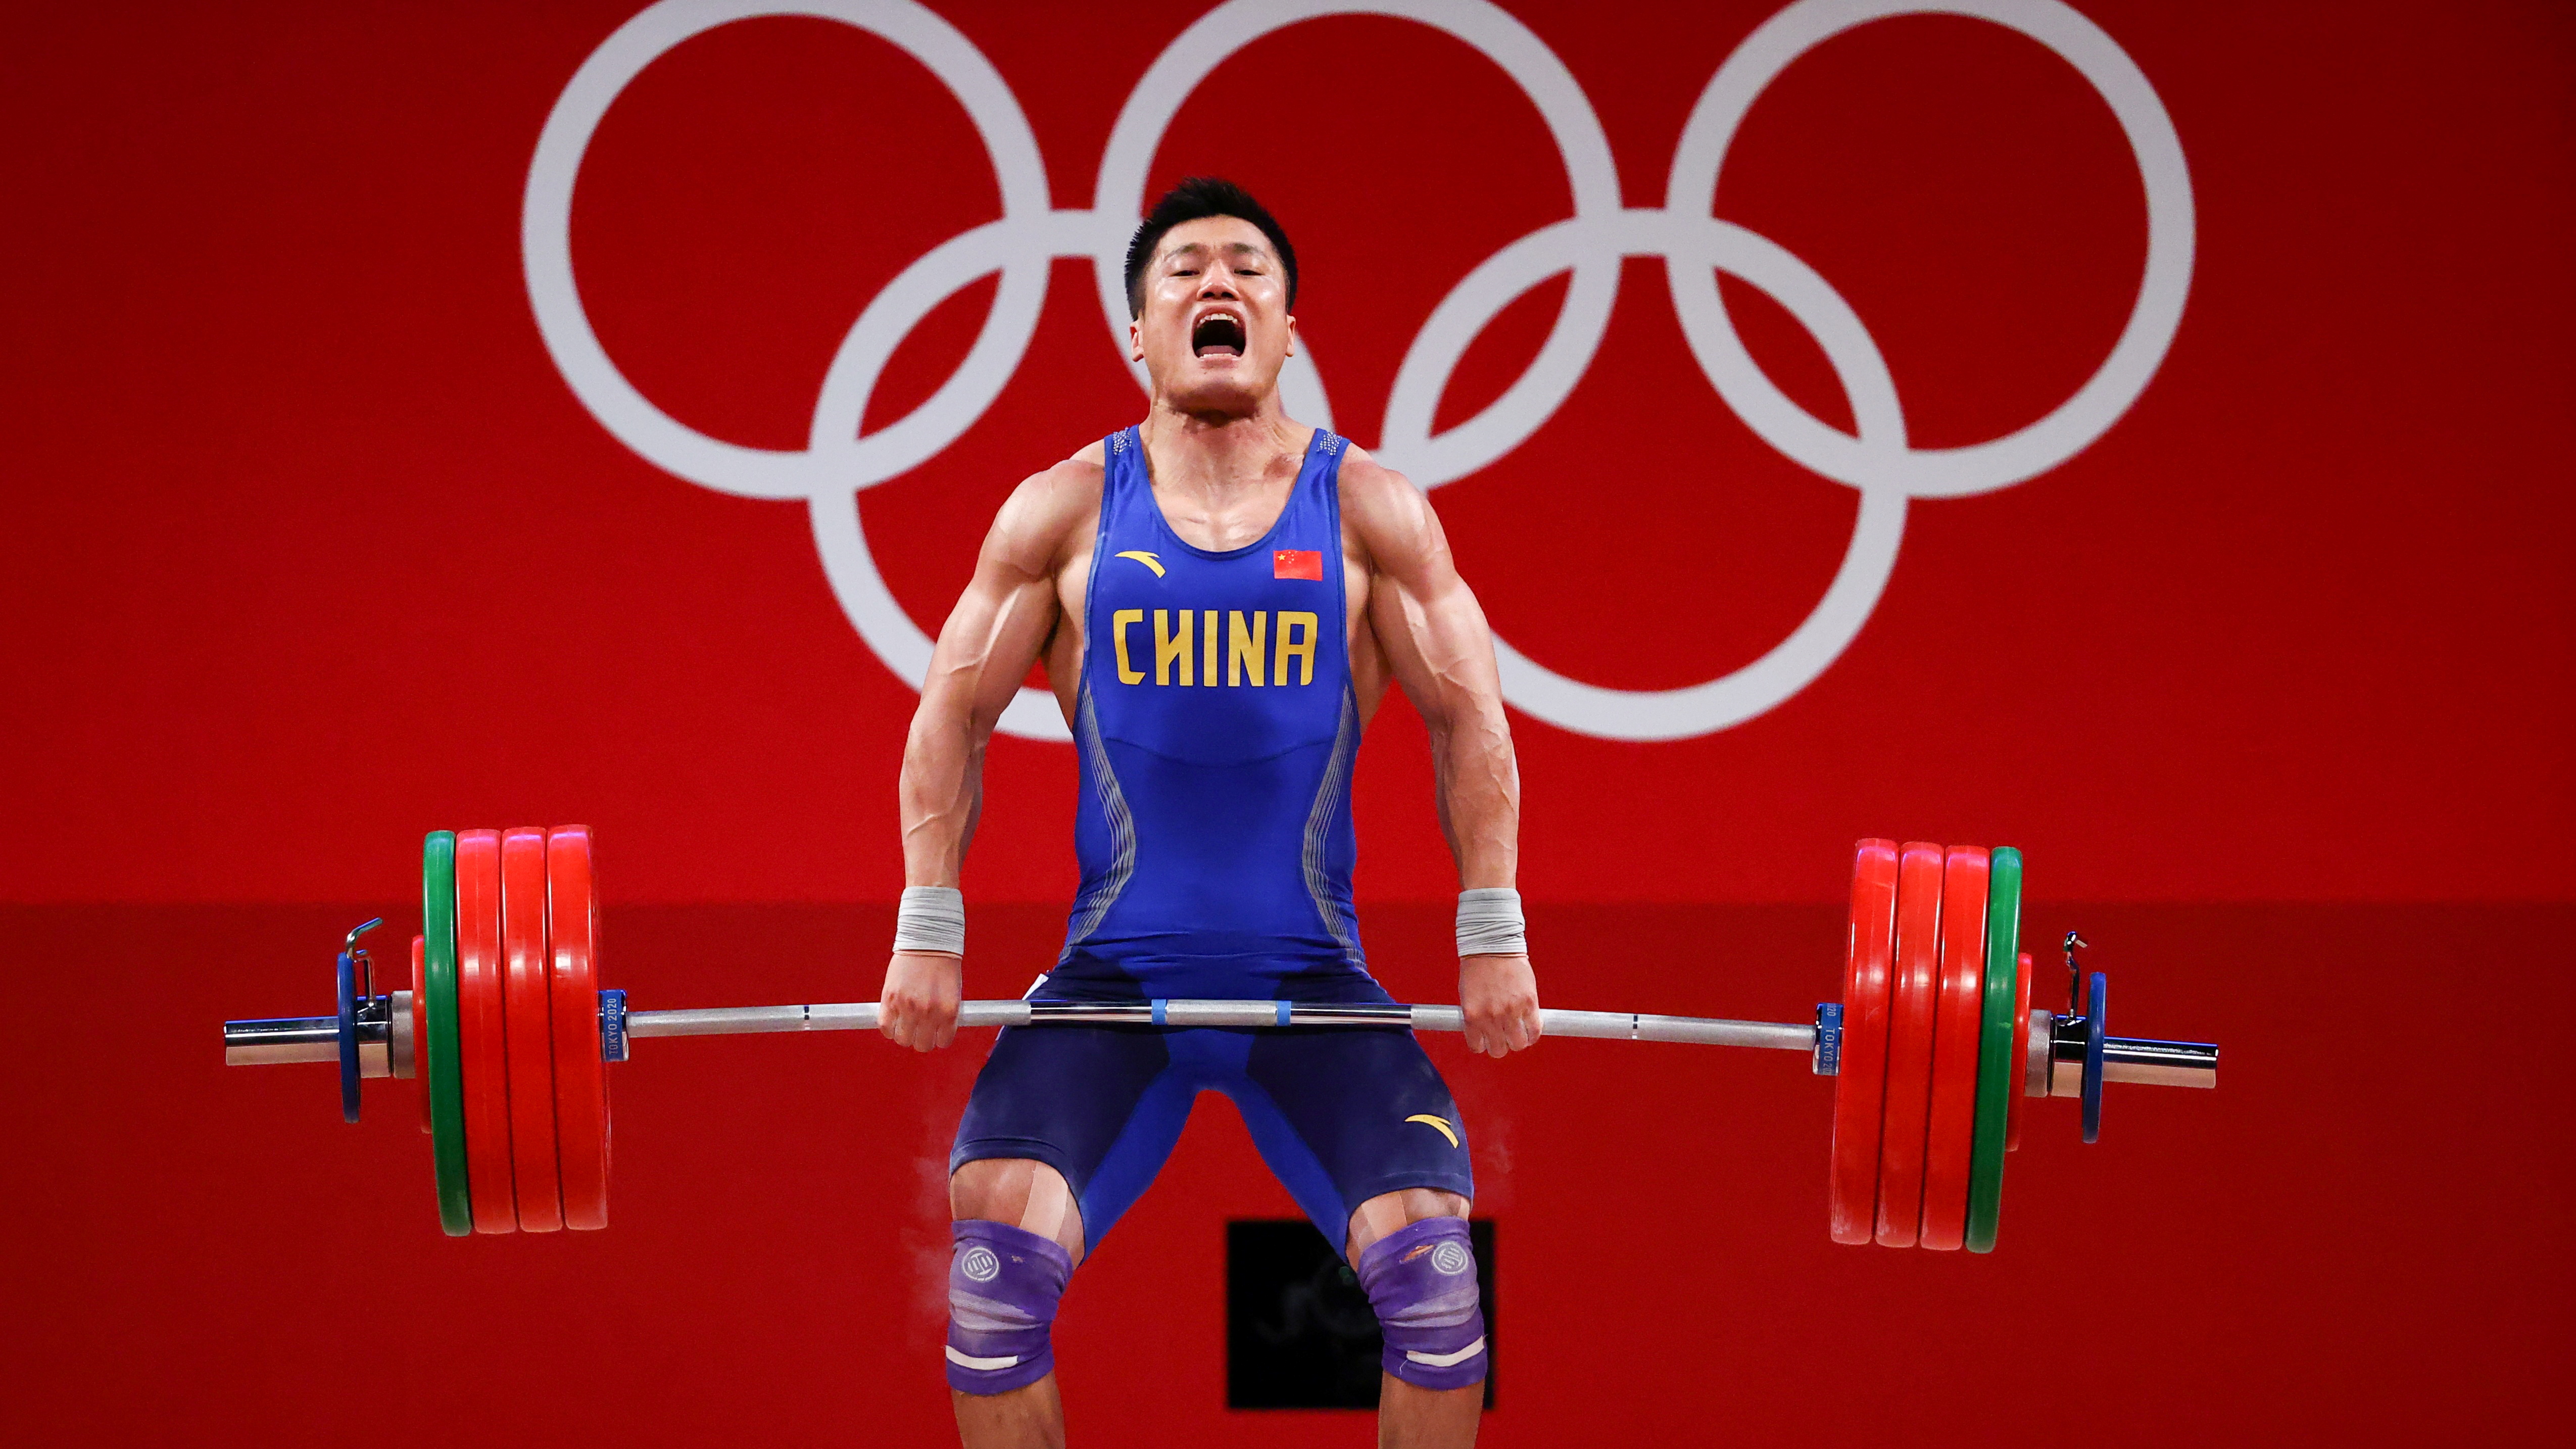 Weightlifting-China's veteran Lyu wins gold in men's 81kg | Reuters